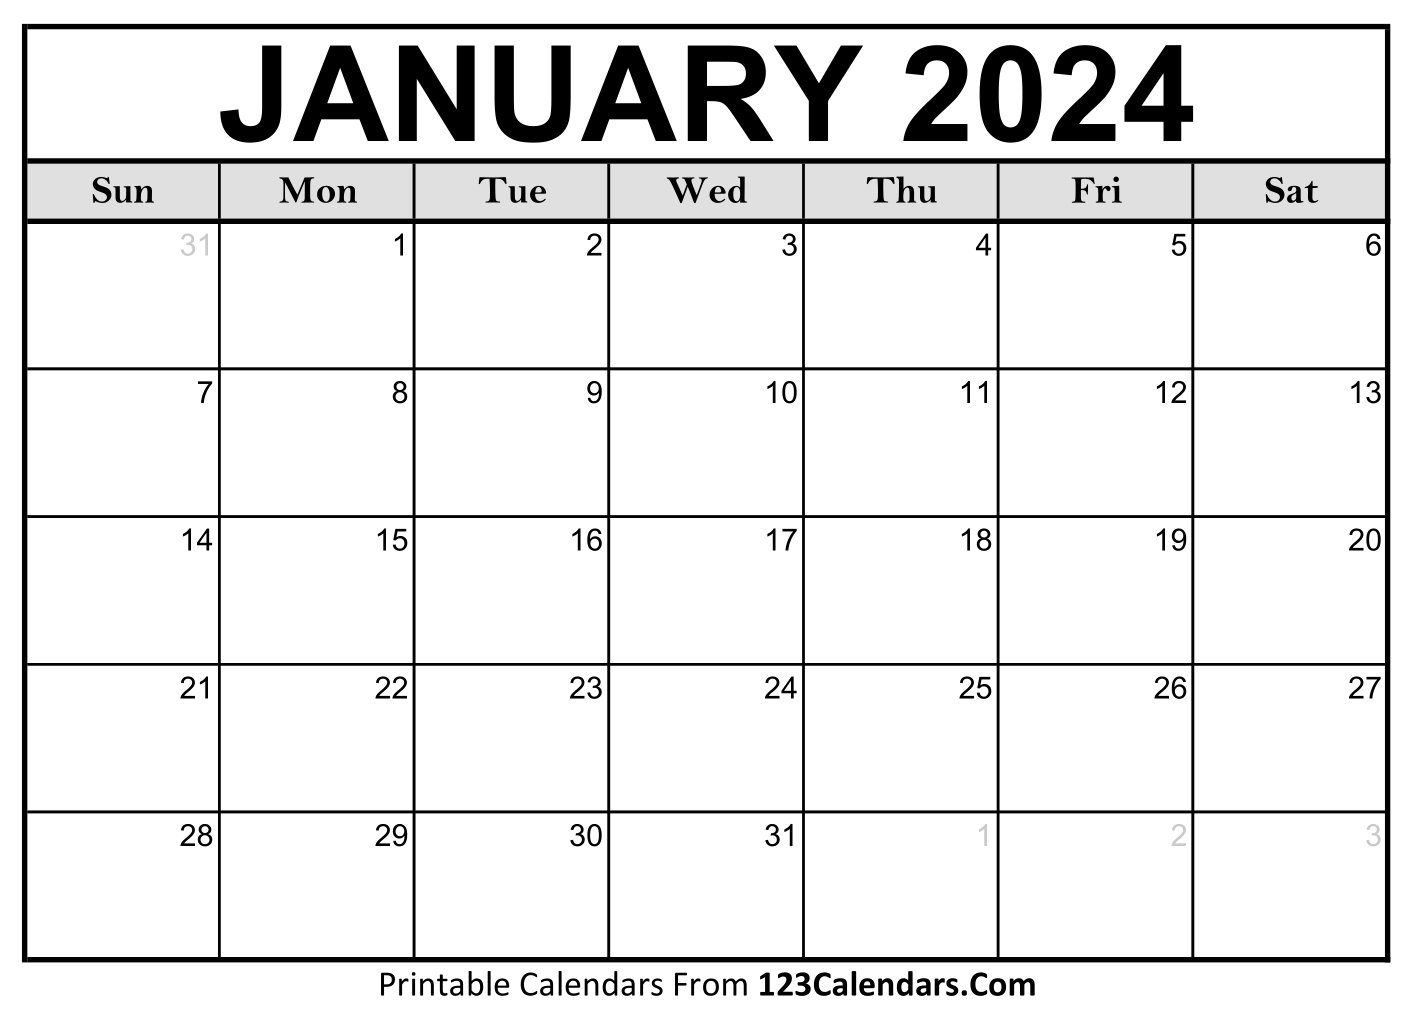 Printable January 2024 Calendar Templates - 123Calendars for Free Printable Calendar Templates January 2024